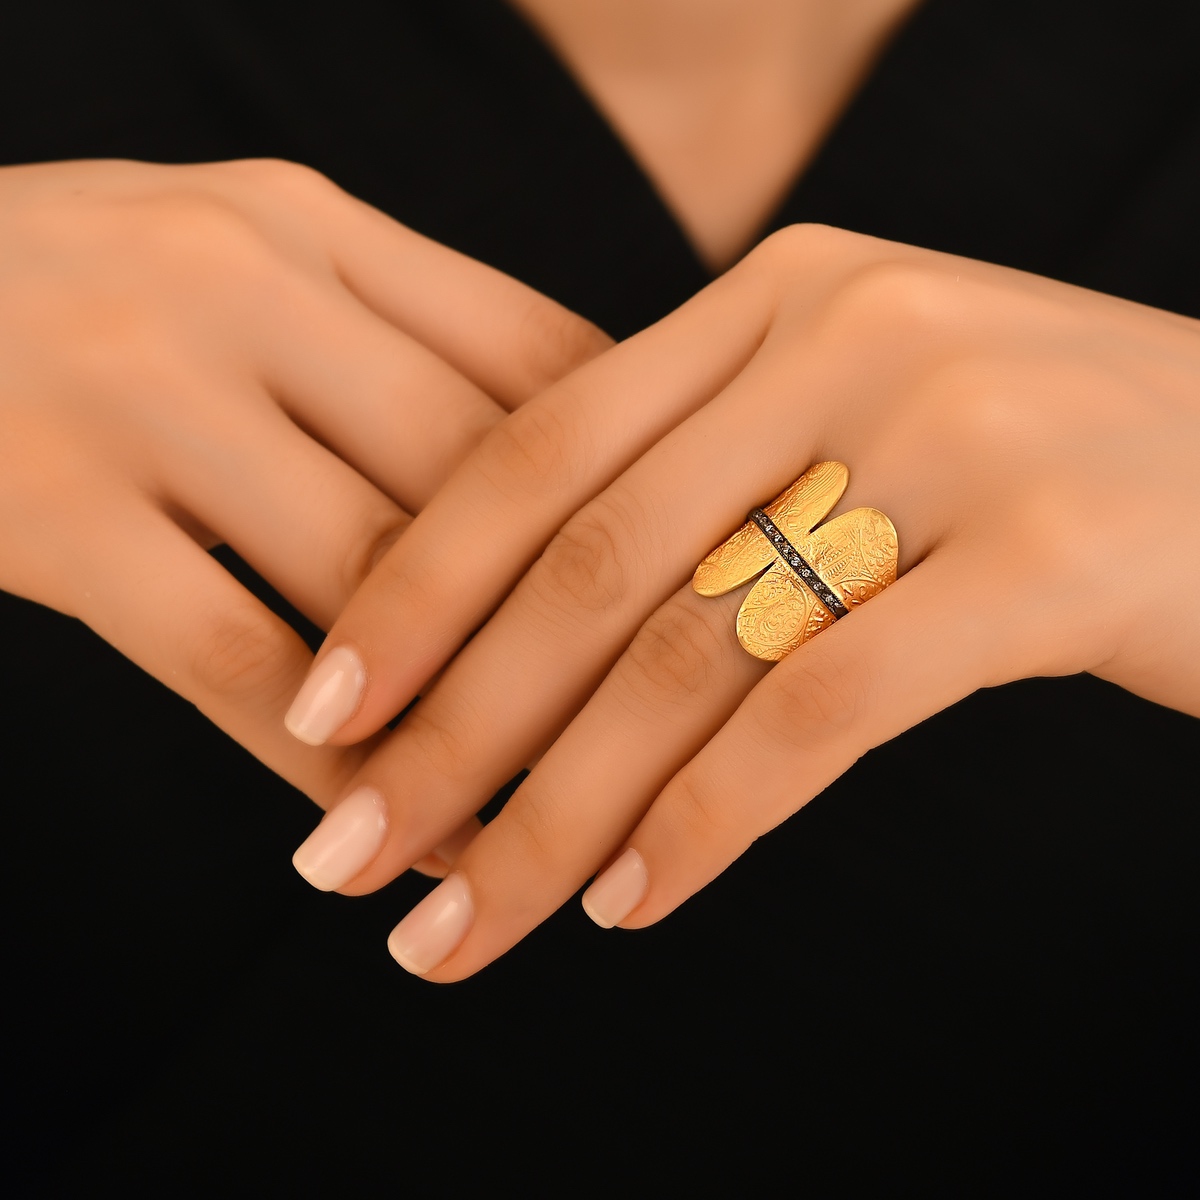 Buy quality Designer 22kt gents gold ring in Pune